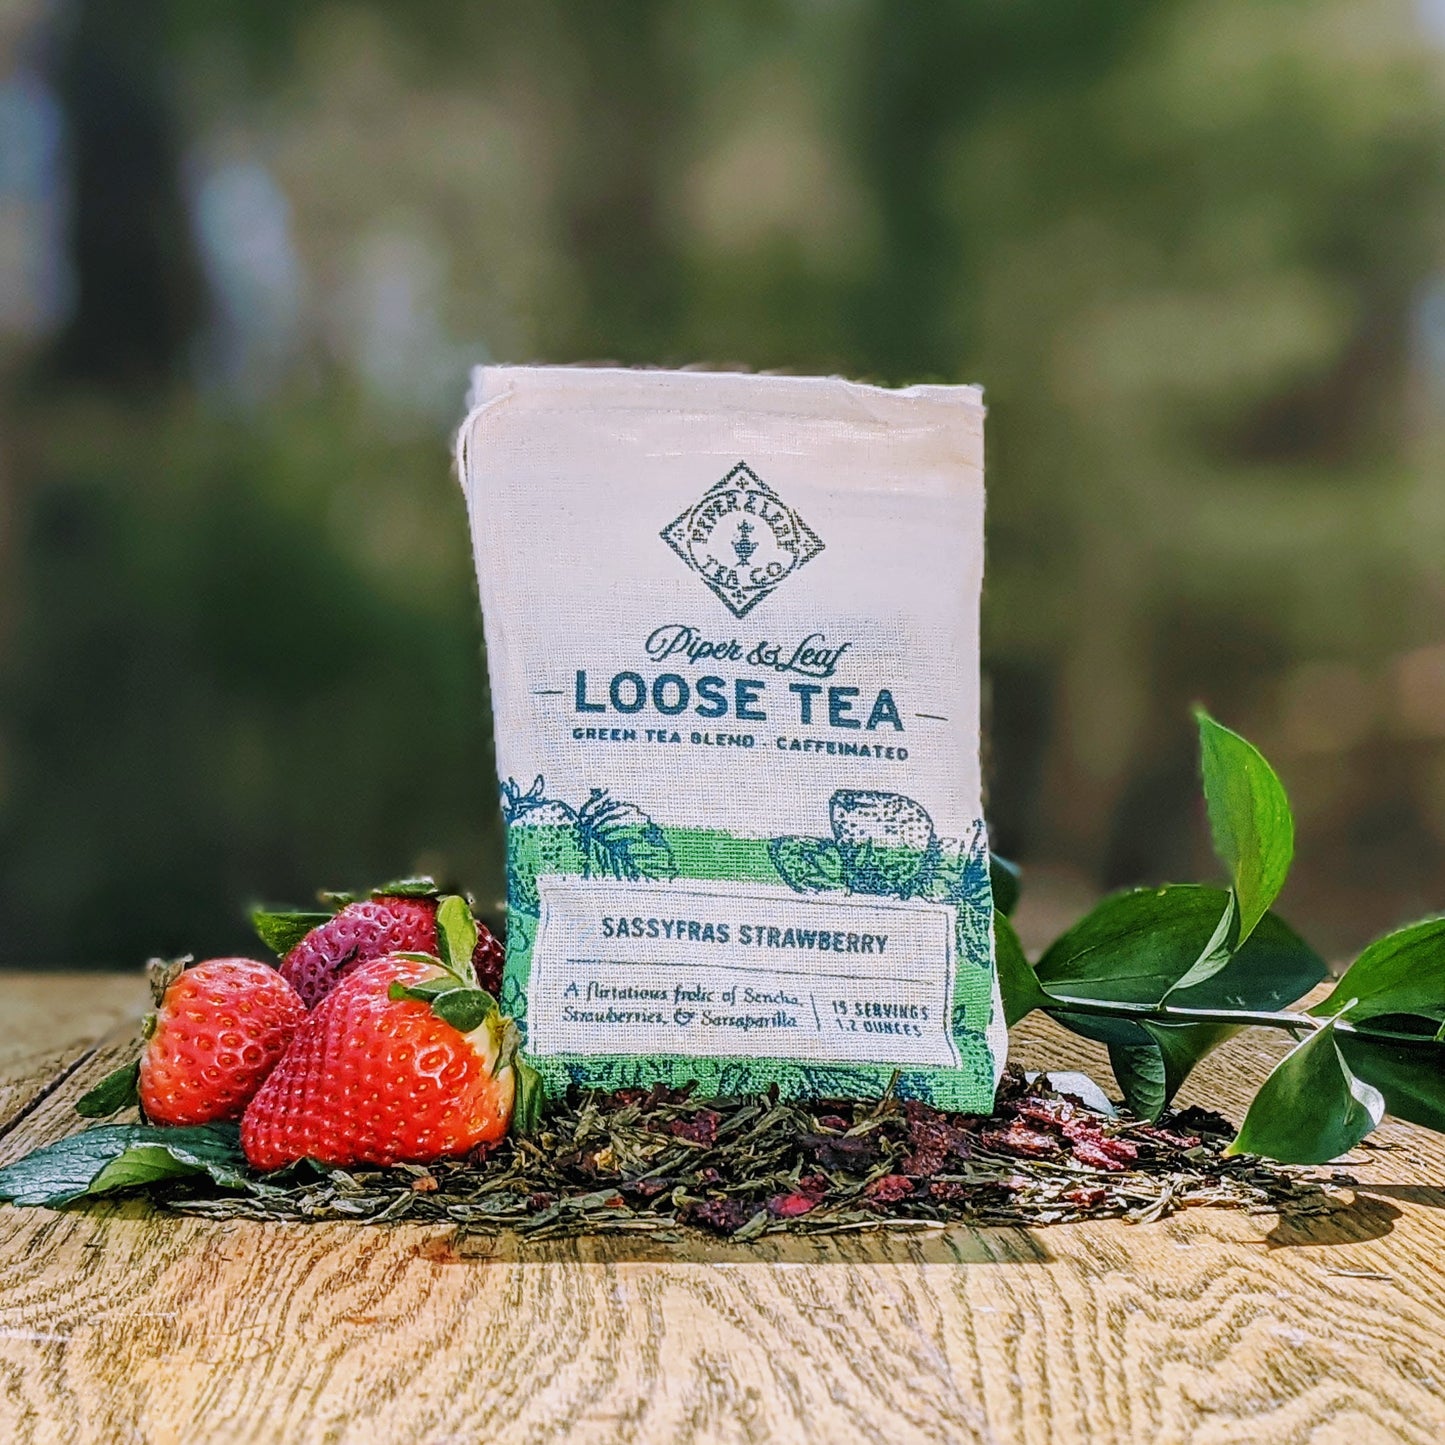 Sassyfras Strawberry Muslin Bag of Loose Leaf Tea - 15 Servings